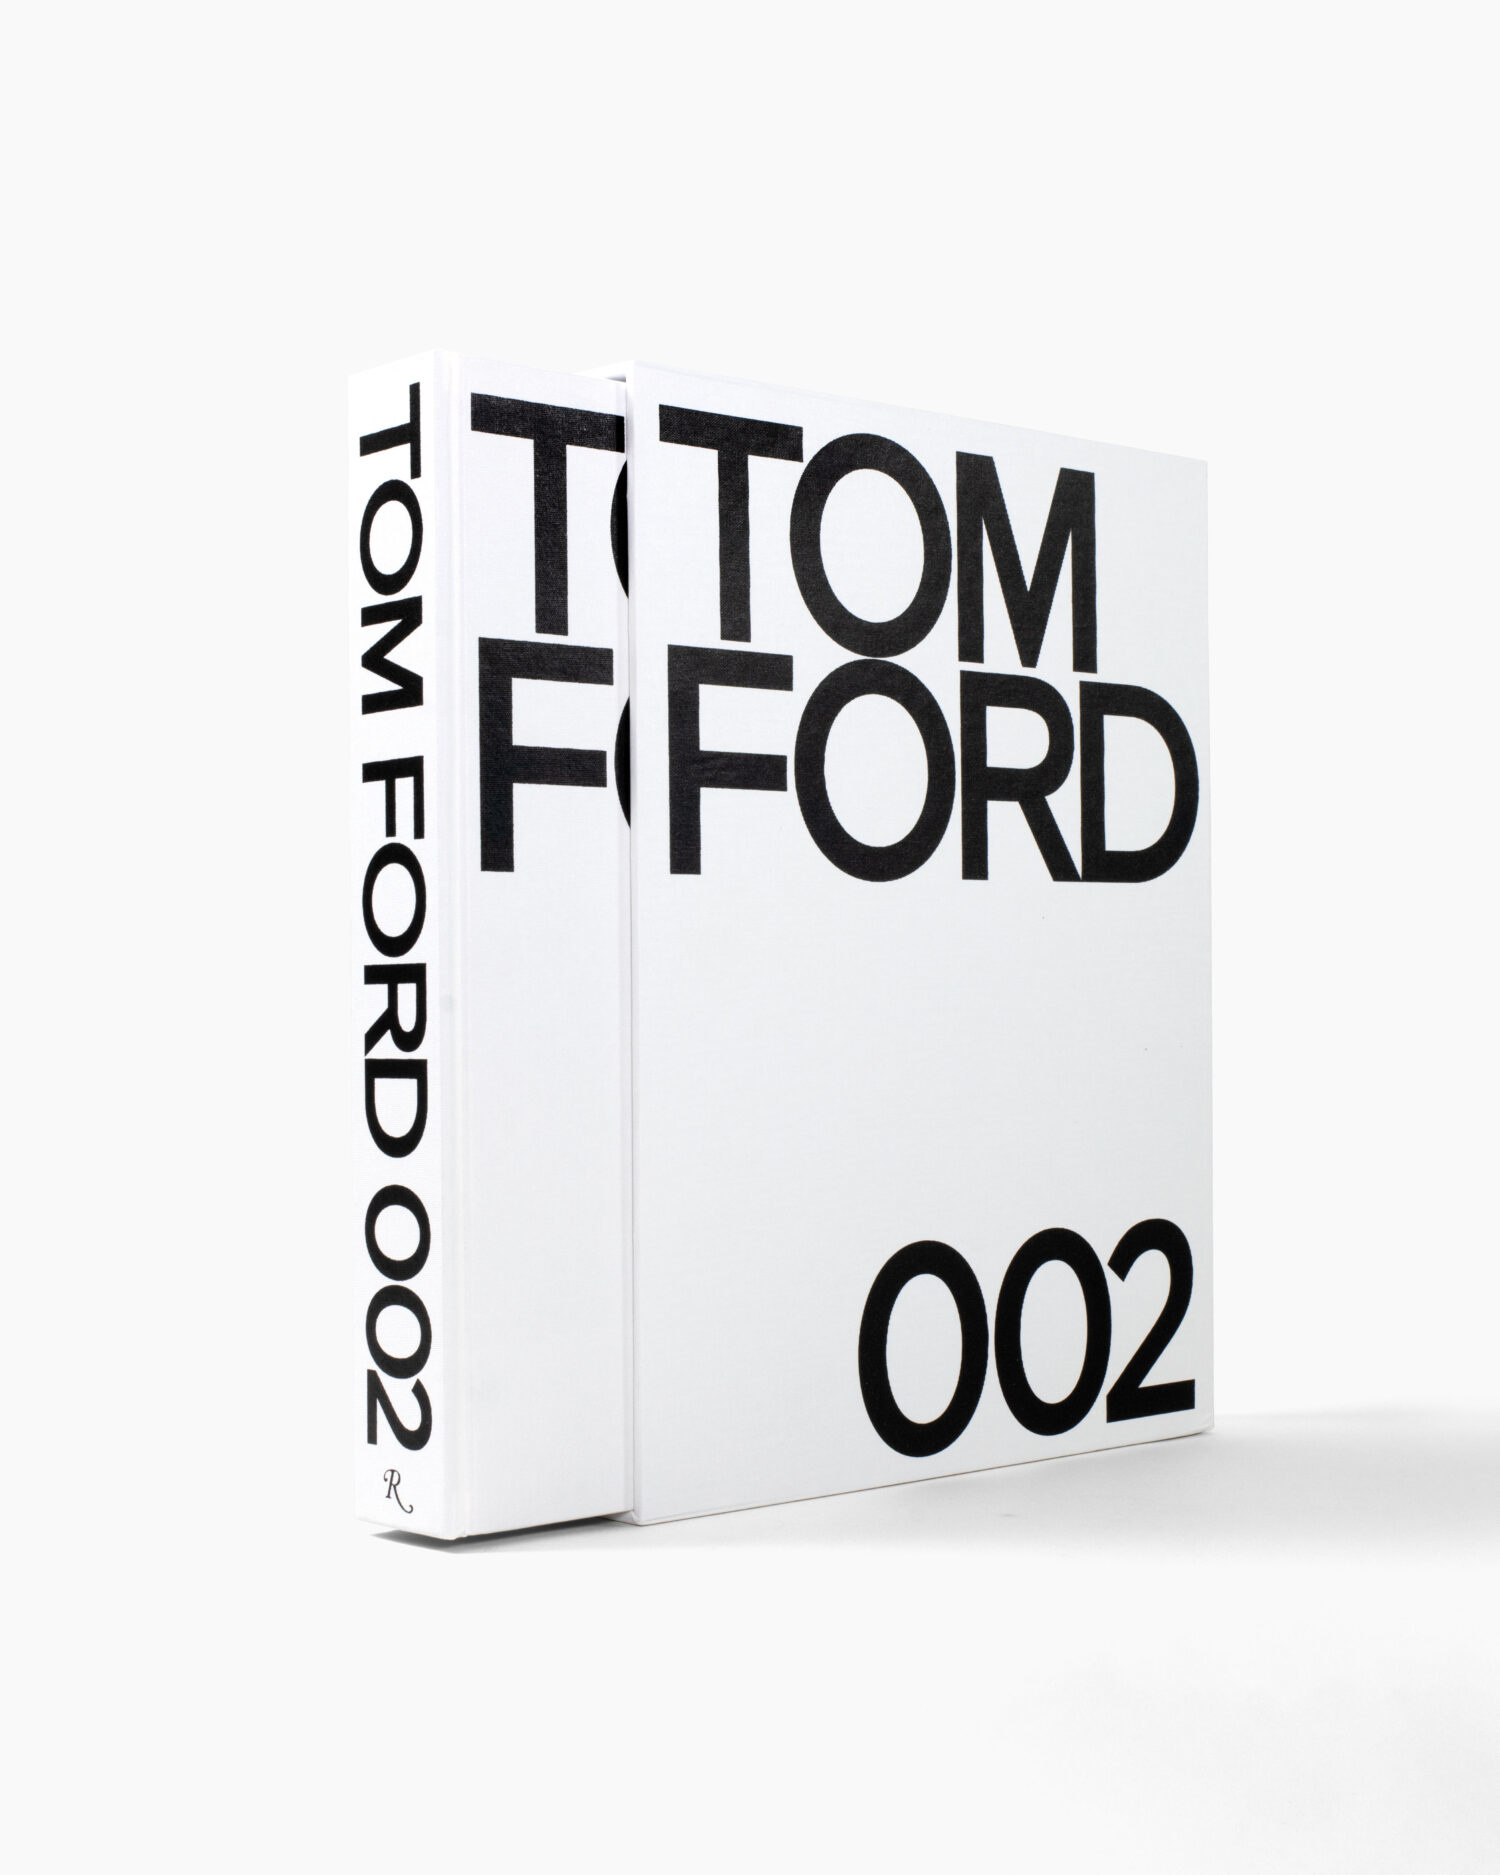 AROWONEN - Tom Ford 002 book